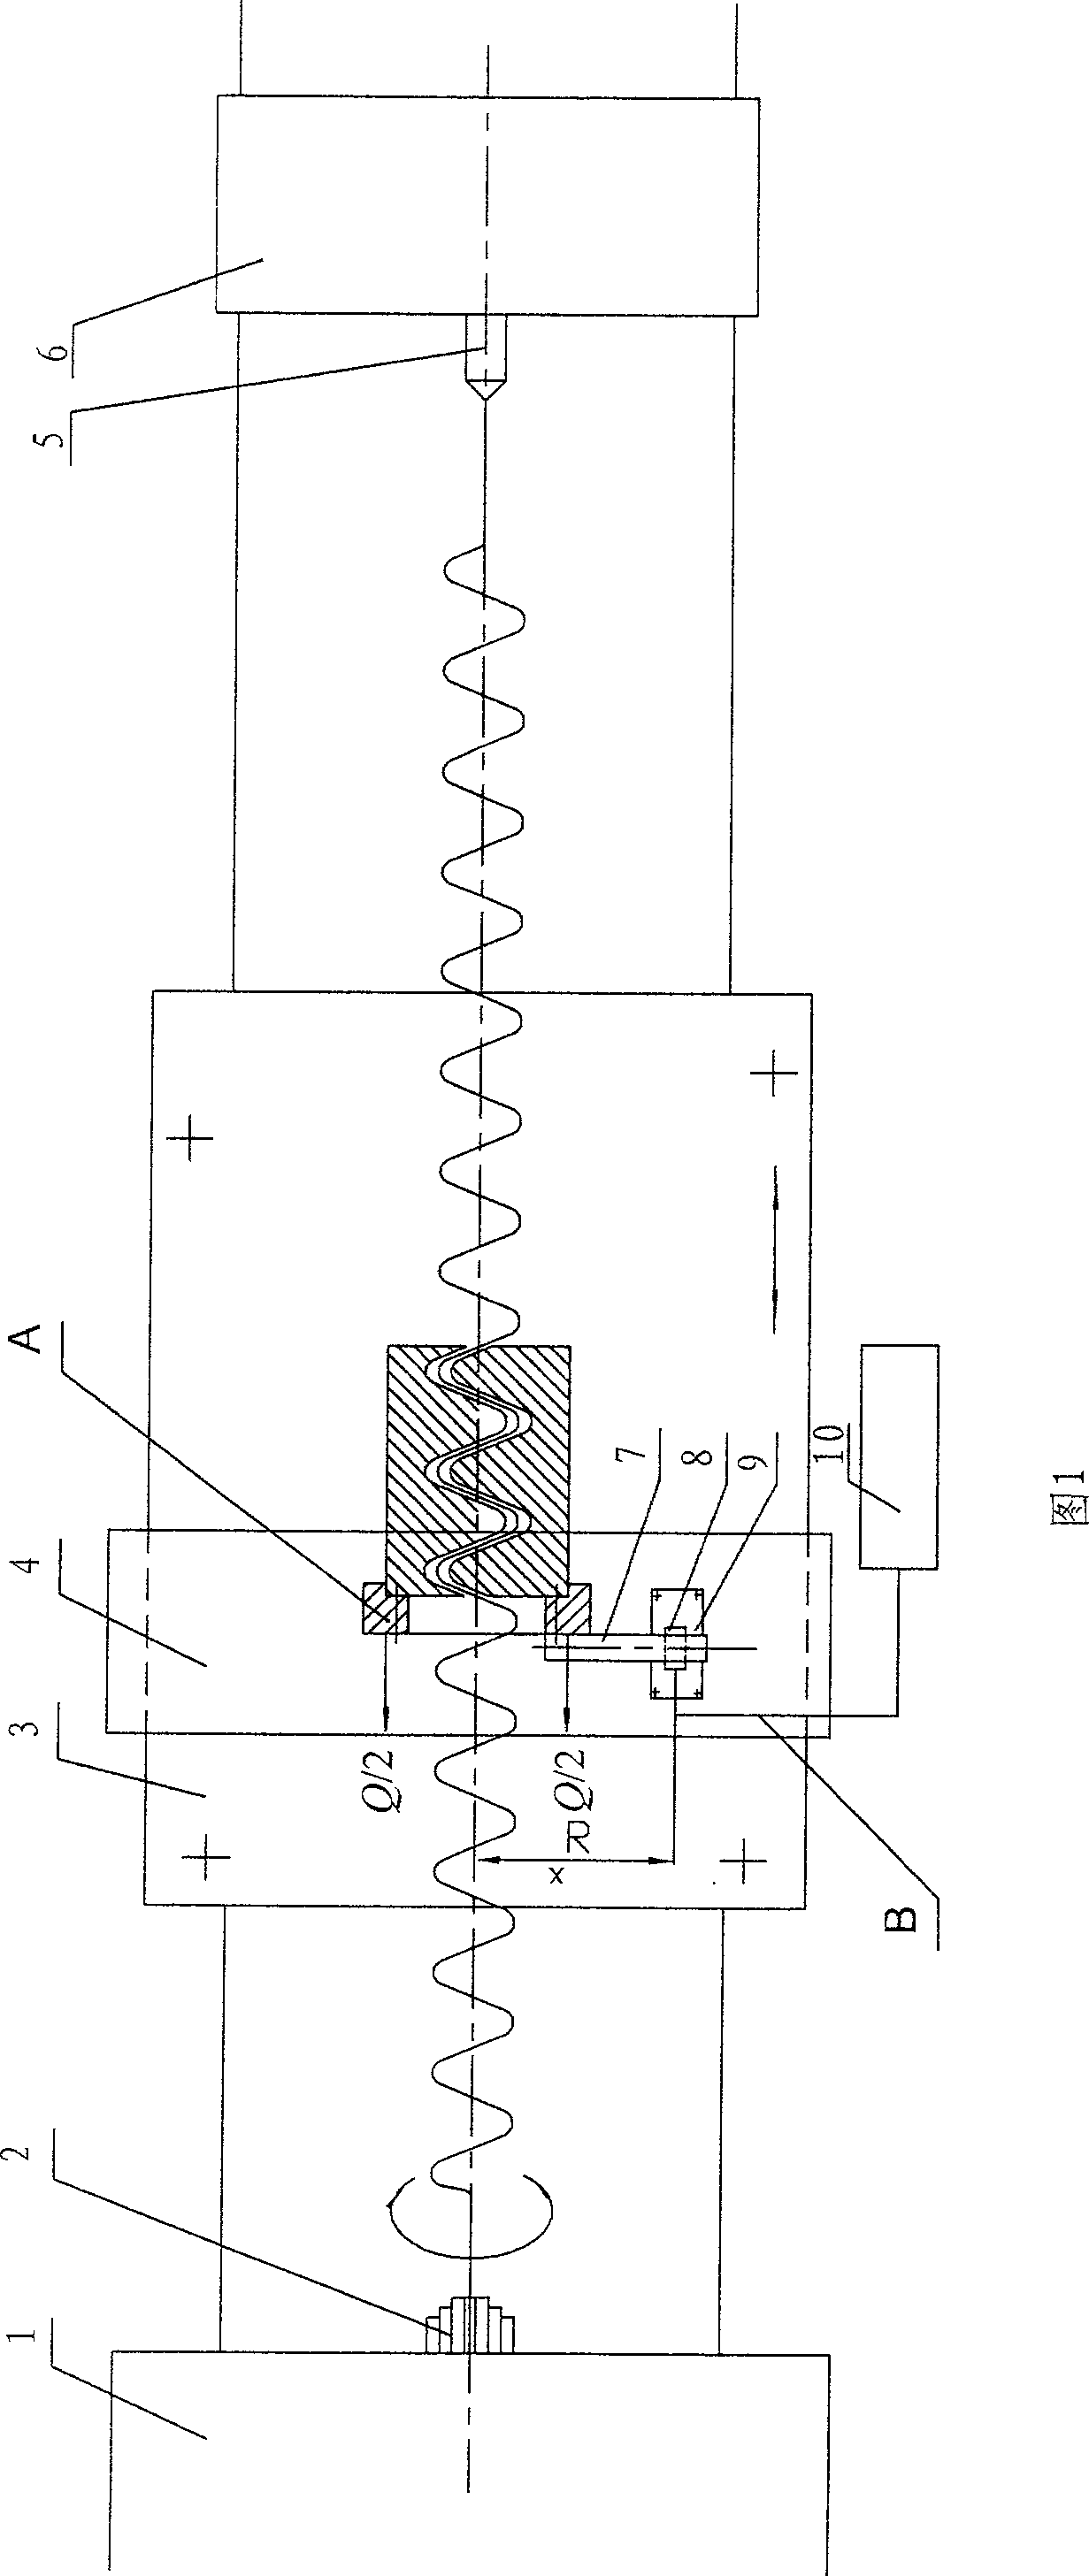 A screw transmission efficiency testing device